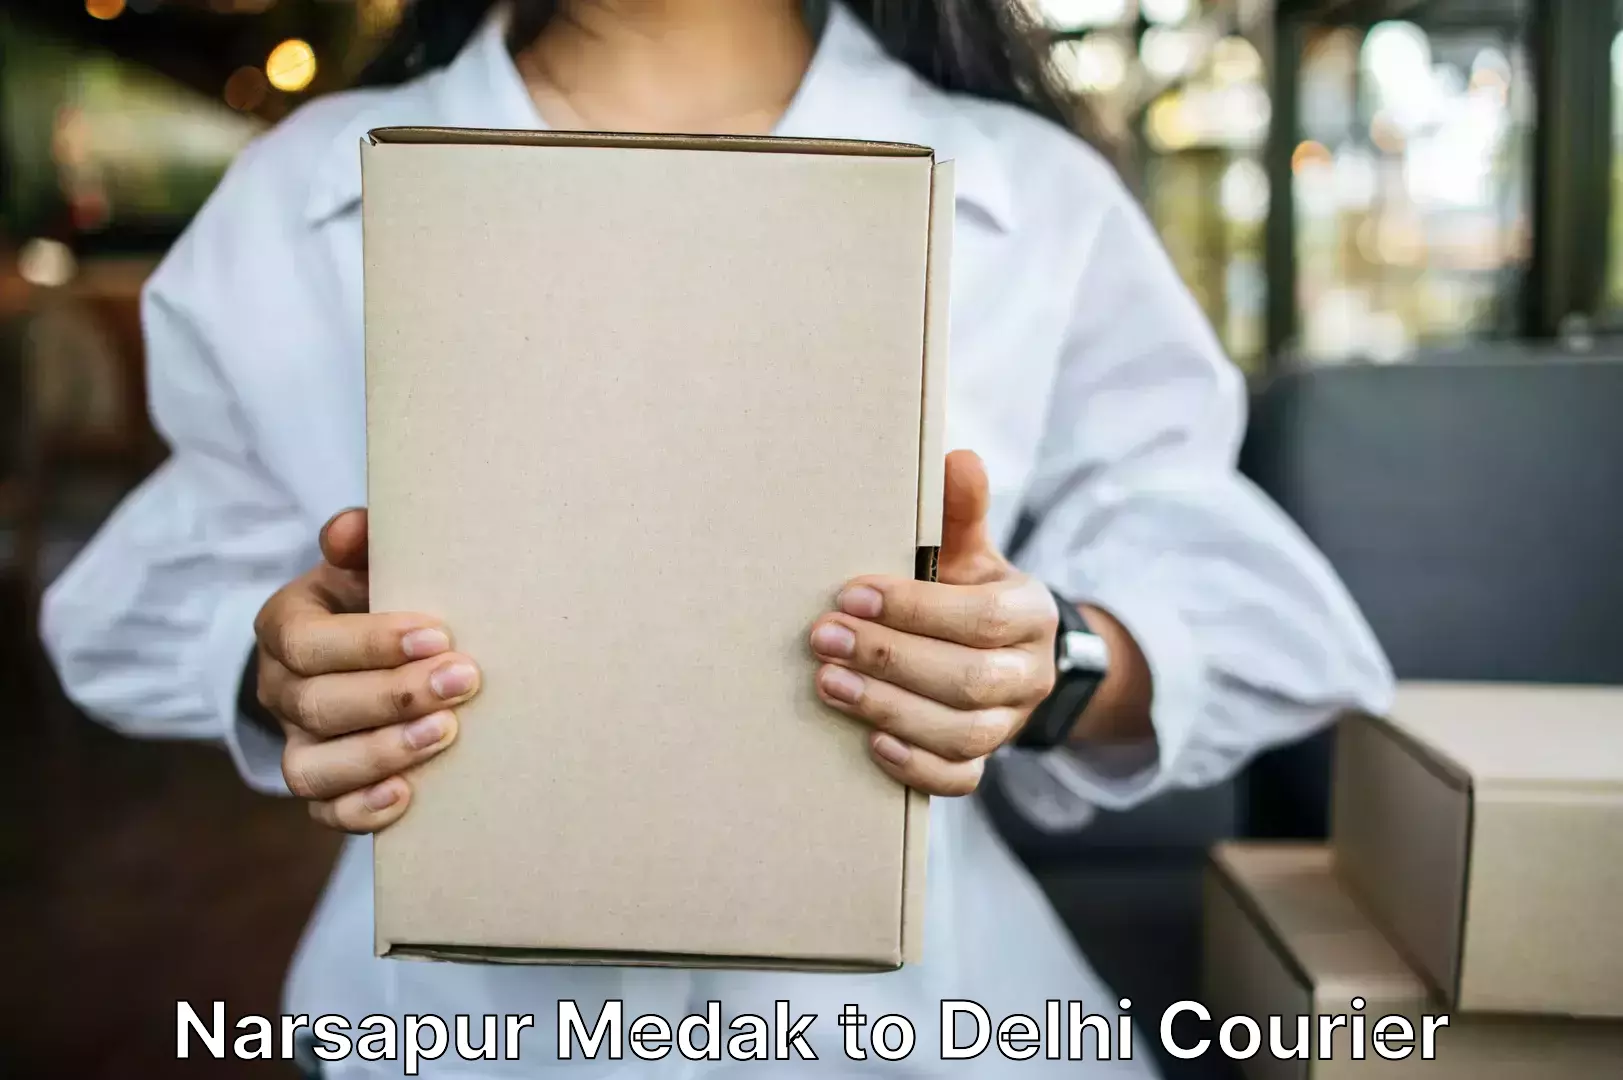 Baggage relocation service Narsapur Medak to NIT Delhi